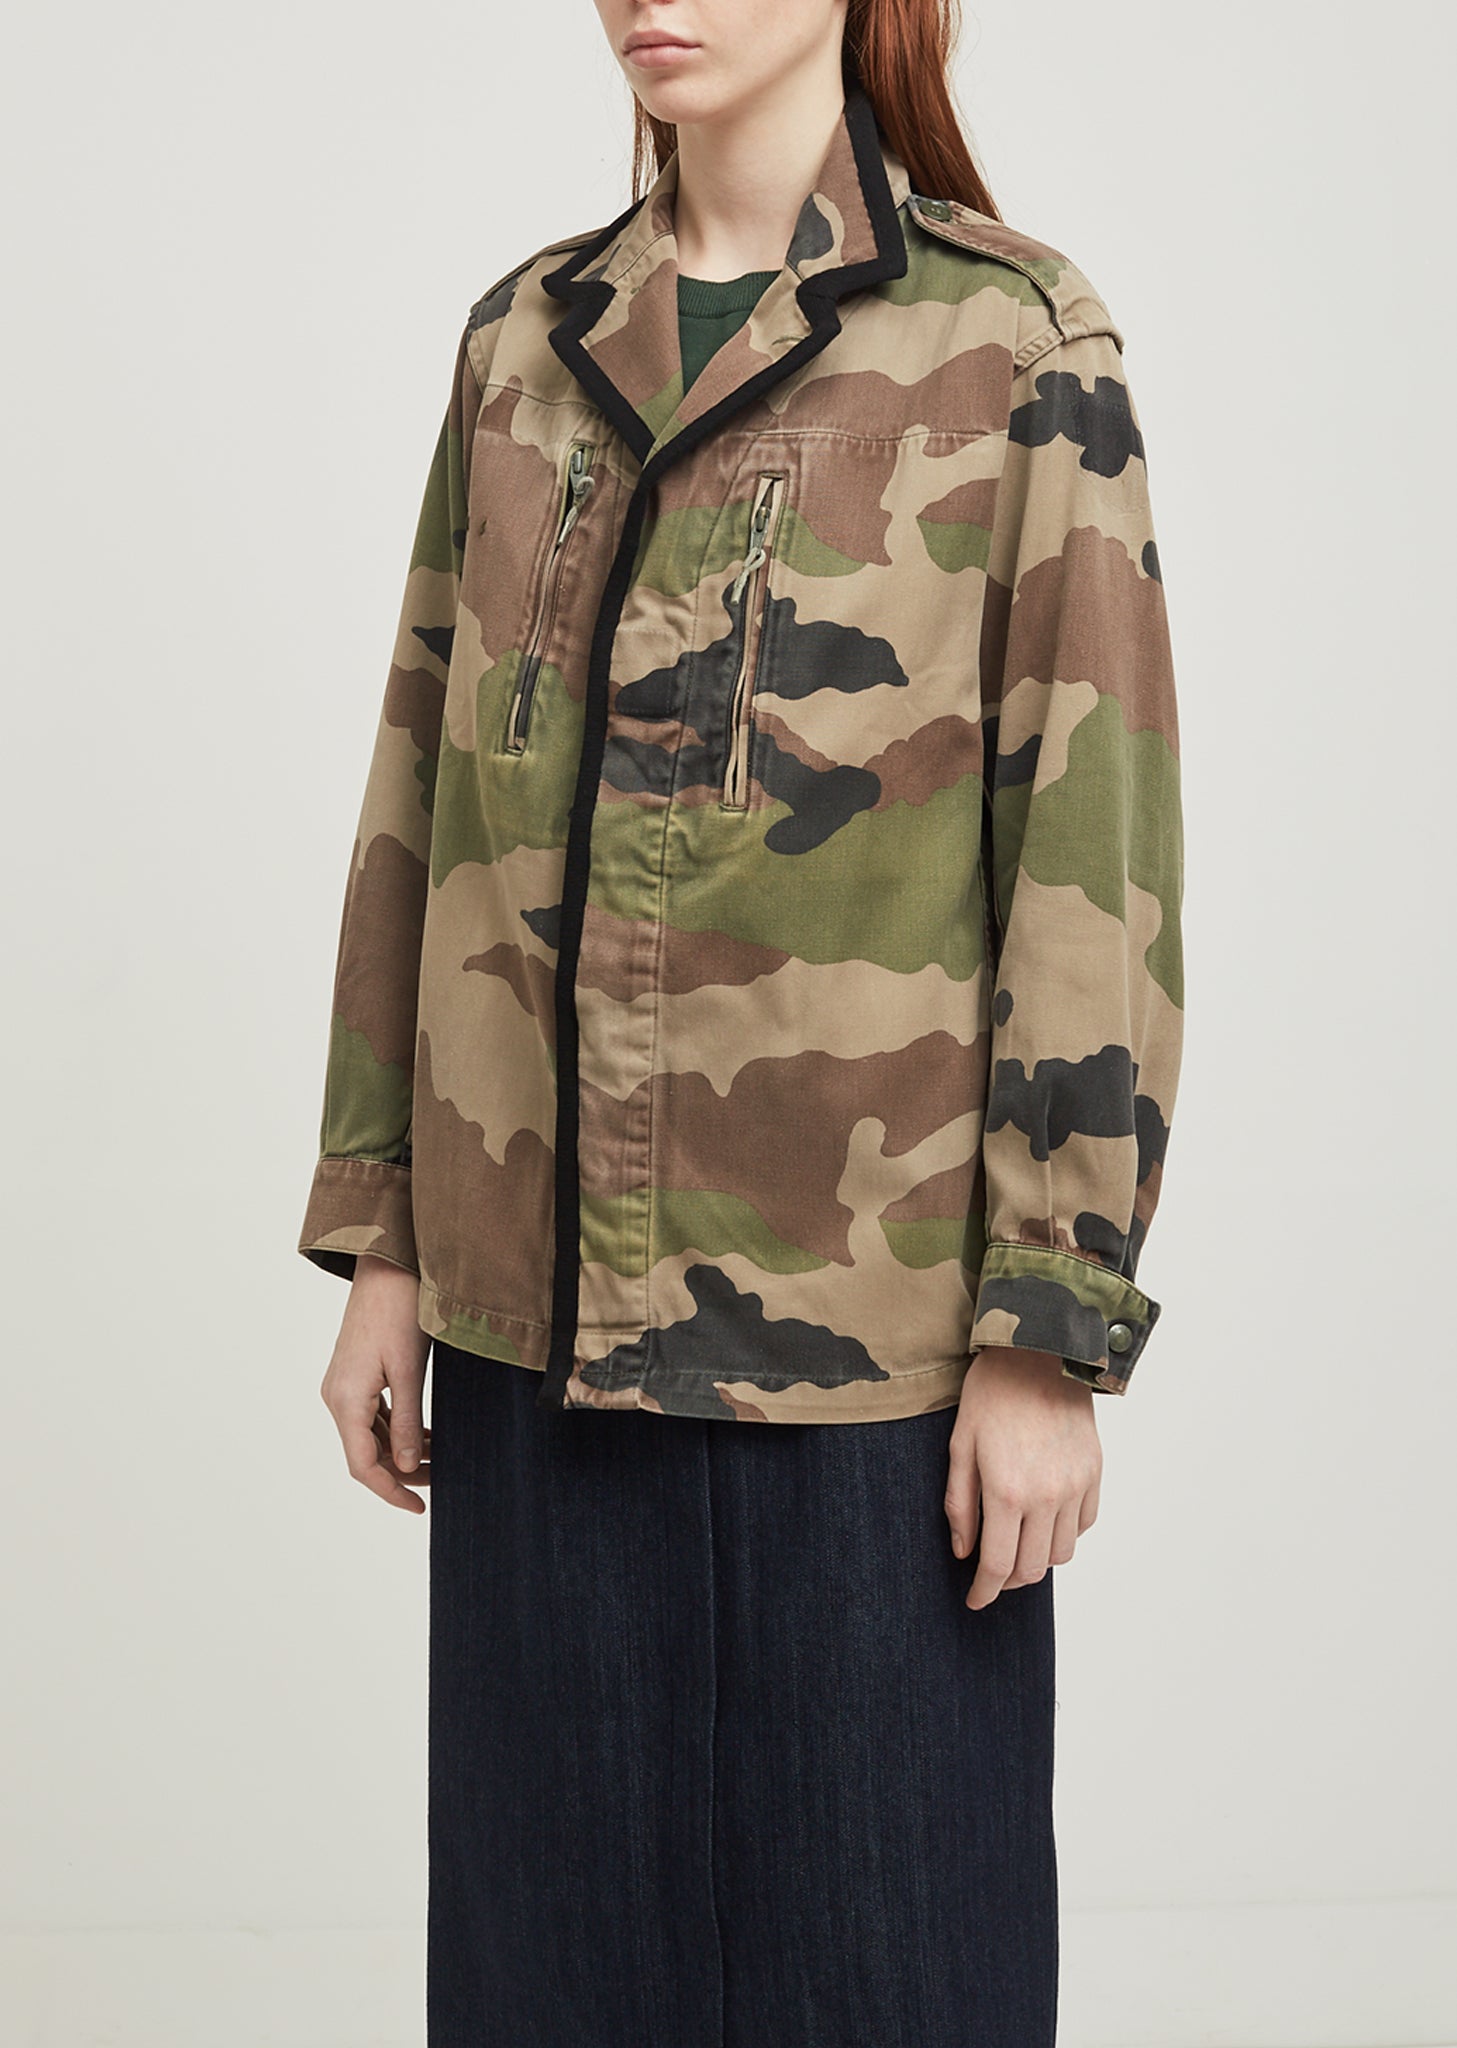 Vroom Camouflage Cotton Blend Military Jacket by Lutz Huelle- La Garçonne